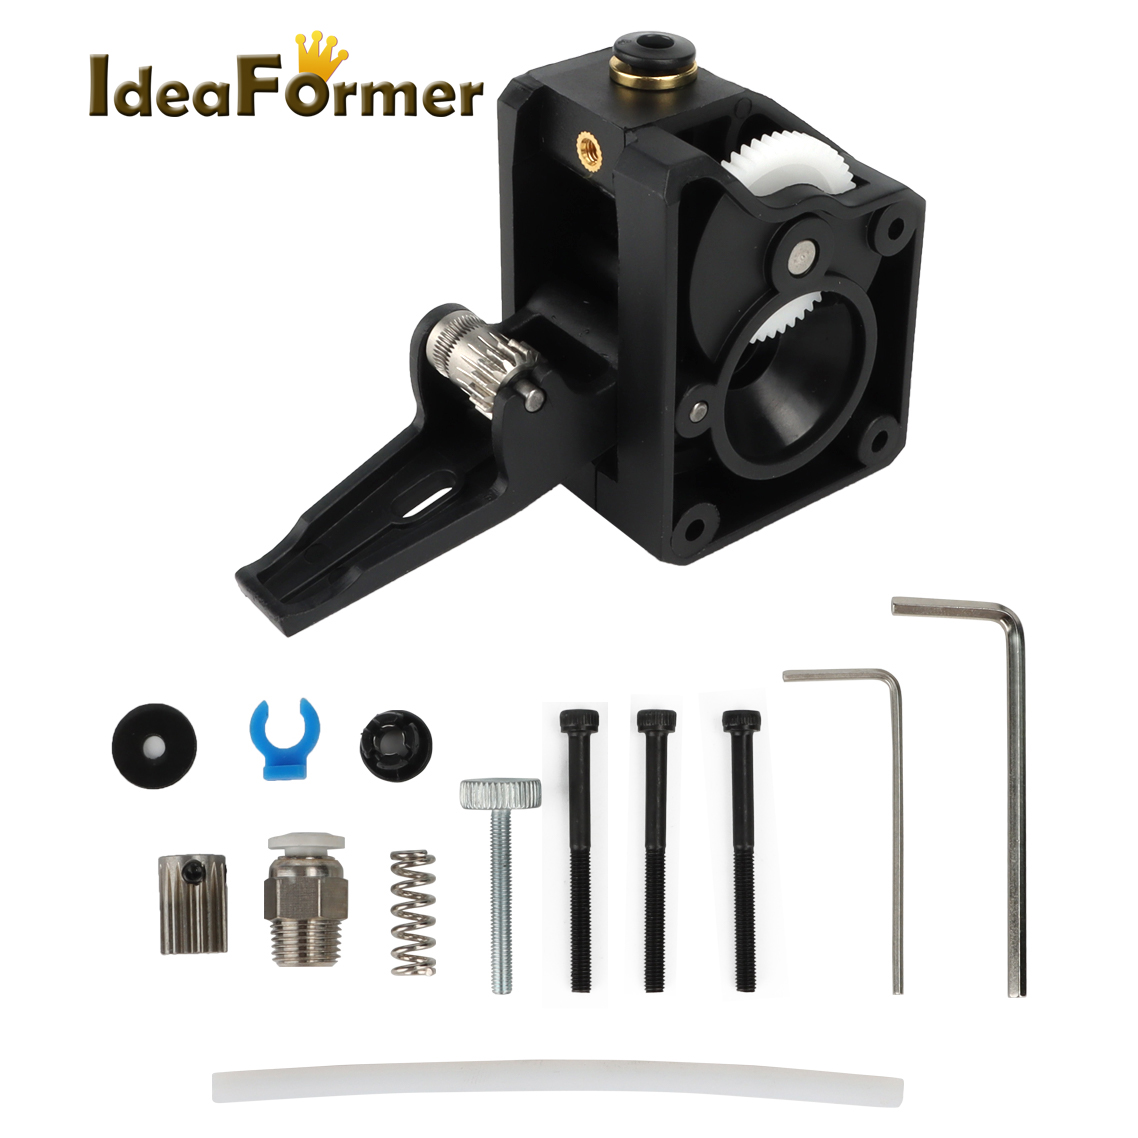 Ideaformer 3D Printer Accessories 3D Printer Extruder, BMG Extruder,Universal Geared Extruder Dual Drive Extruder for Ideaformer 3D Printer IR3 & IR3 V1